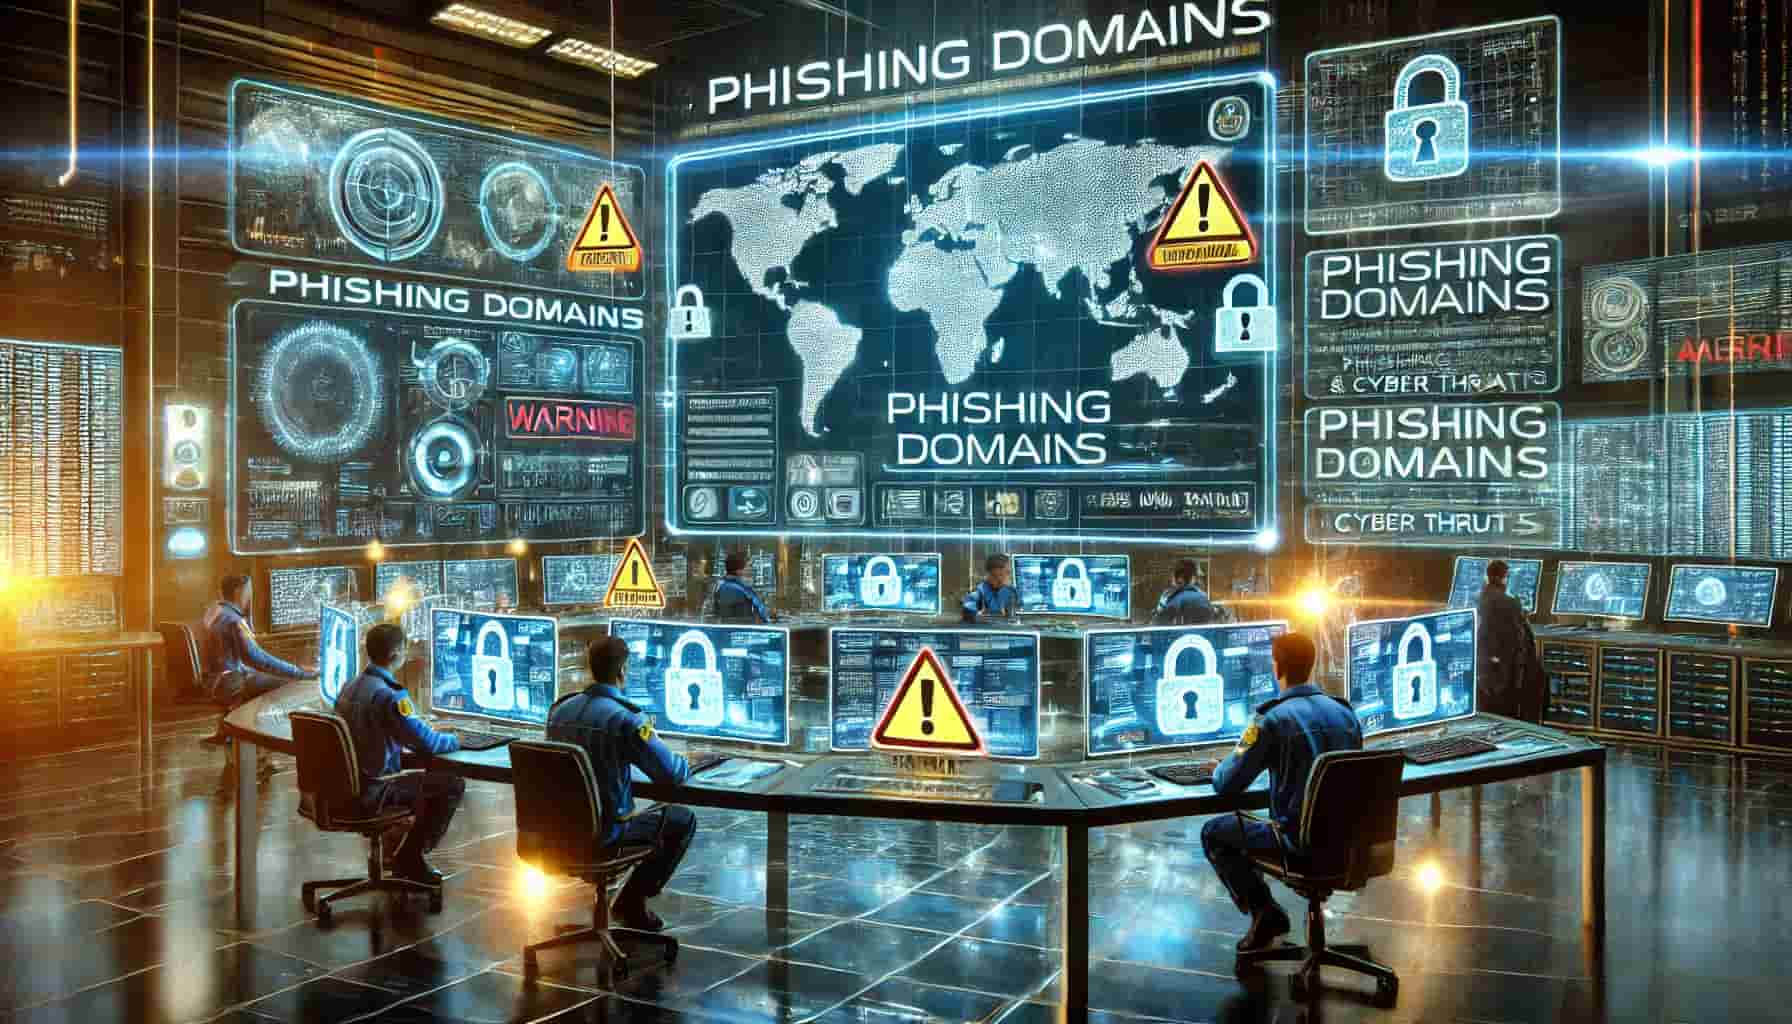 detectar phishing domains